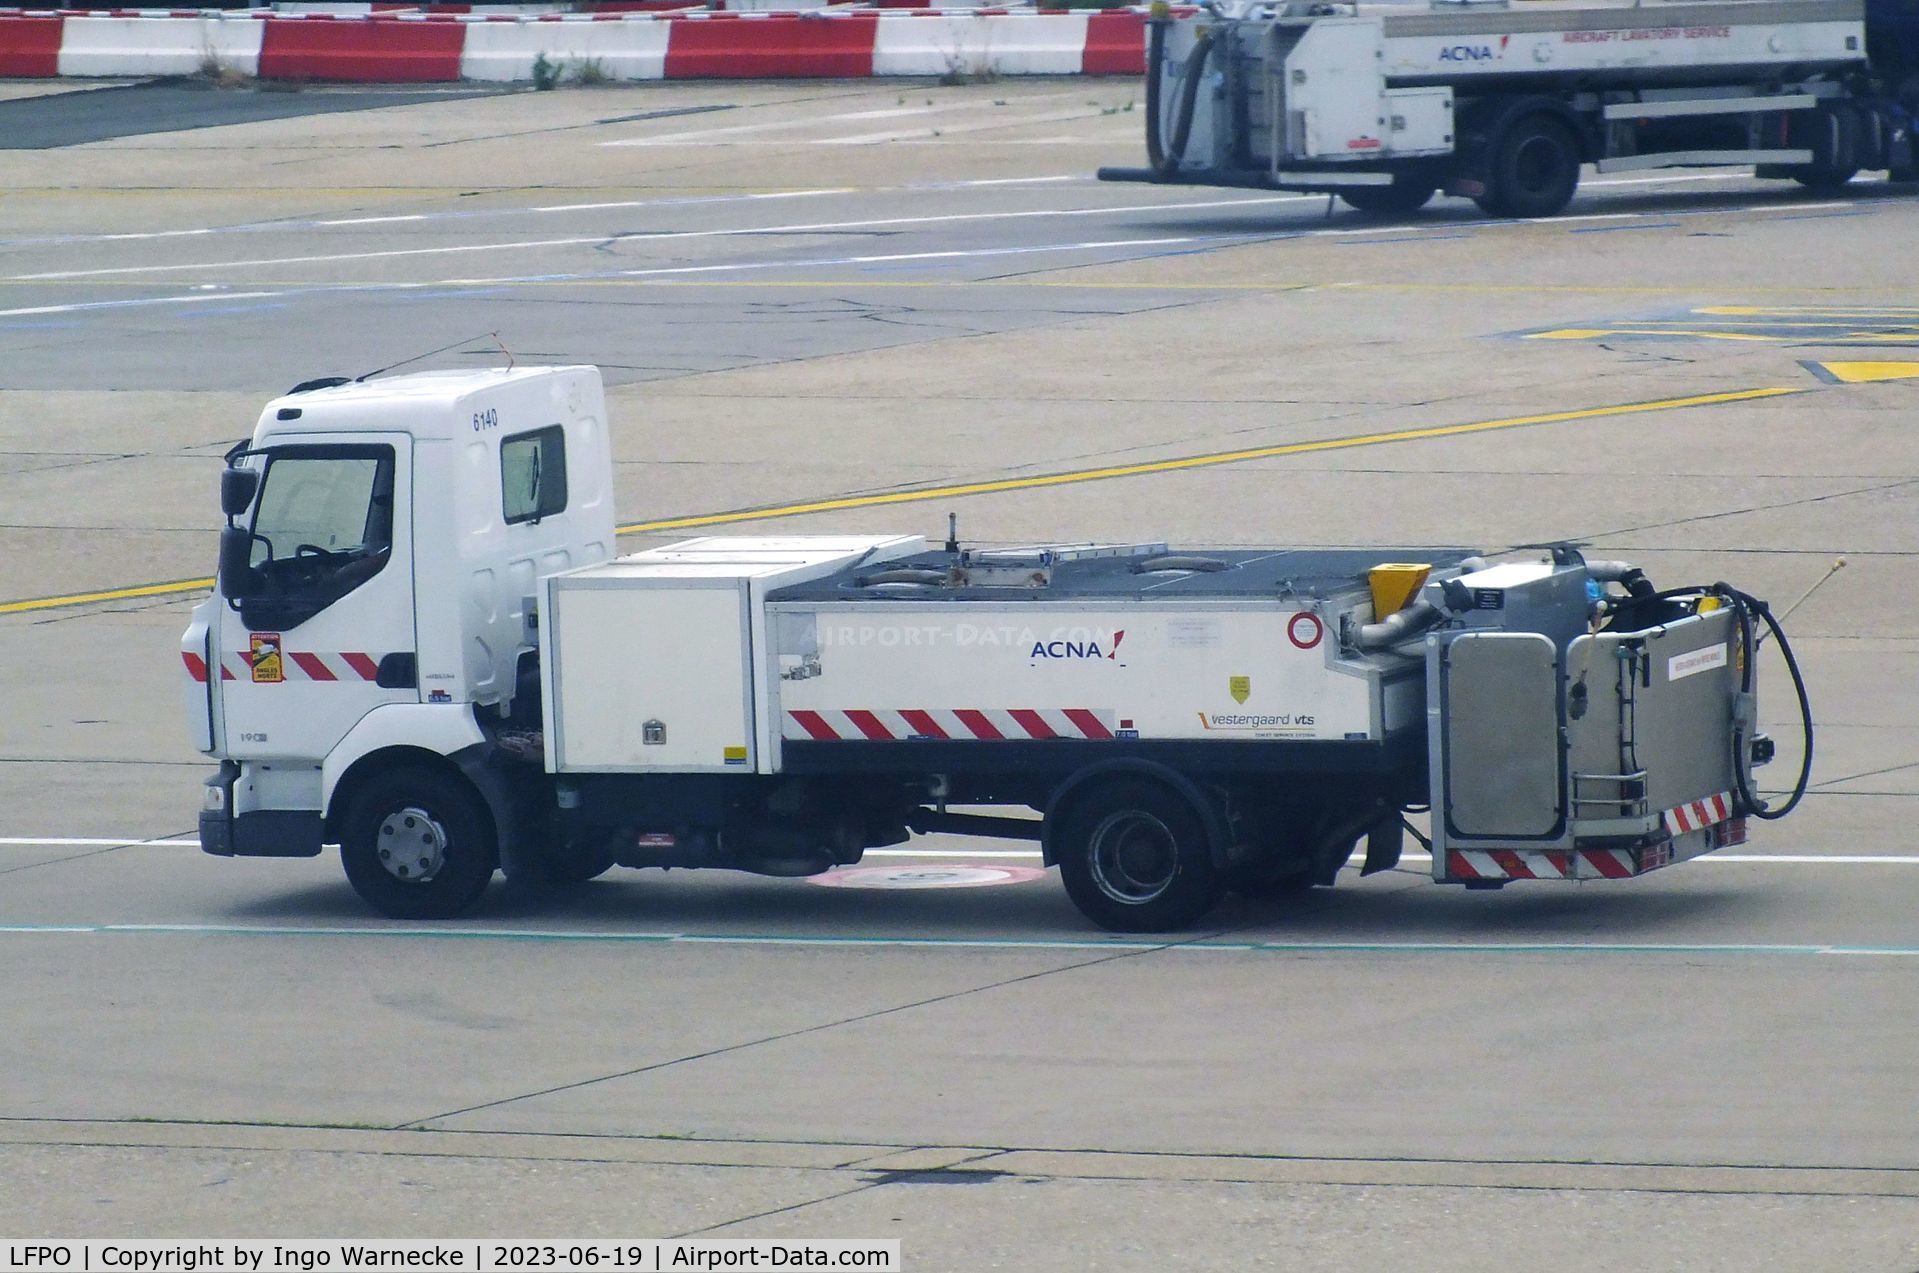 Paris Orly Airport, Orly (near Paris) France (LFPO) - lavatory service vehicle ('honey-truck') at Paris/Orly airport